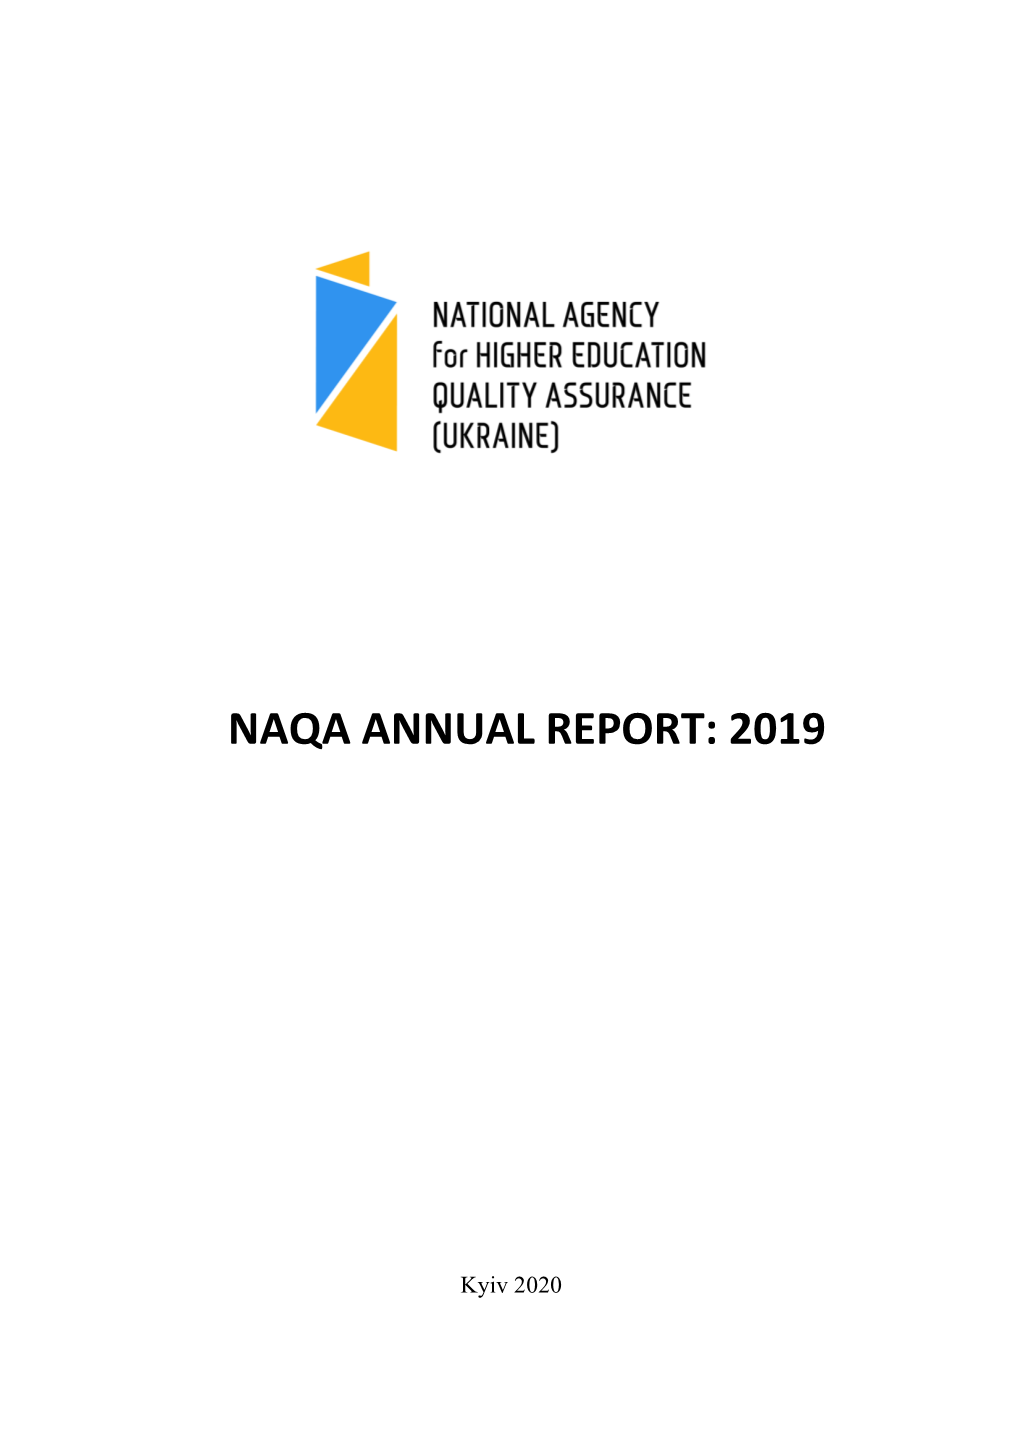 Naqa Annual Report: 2019